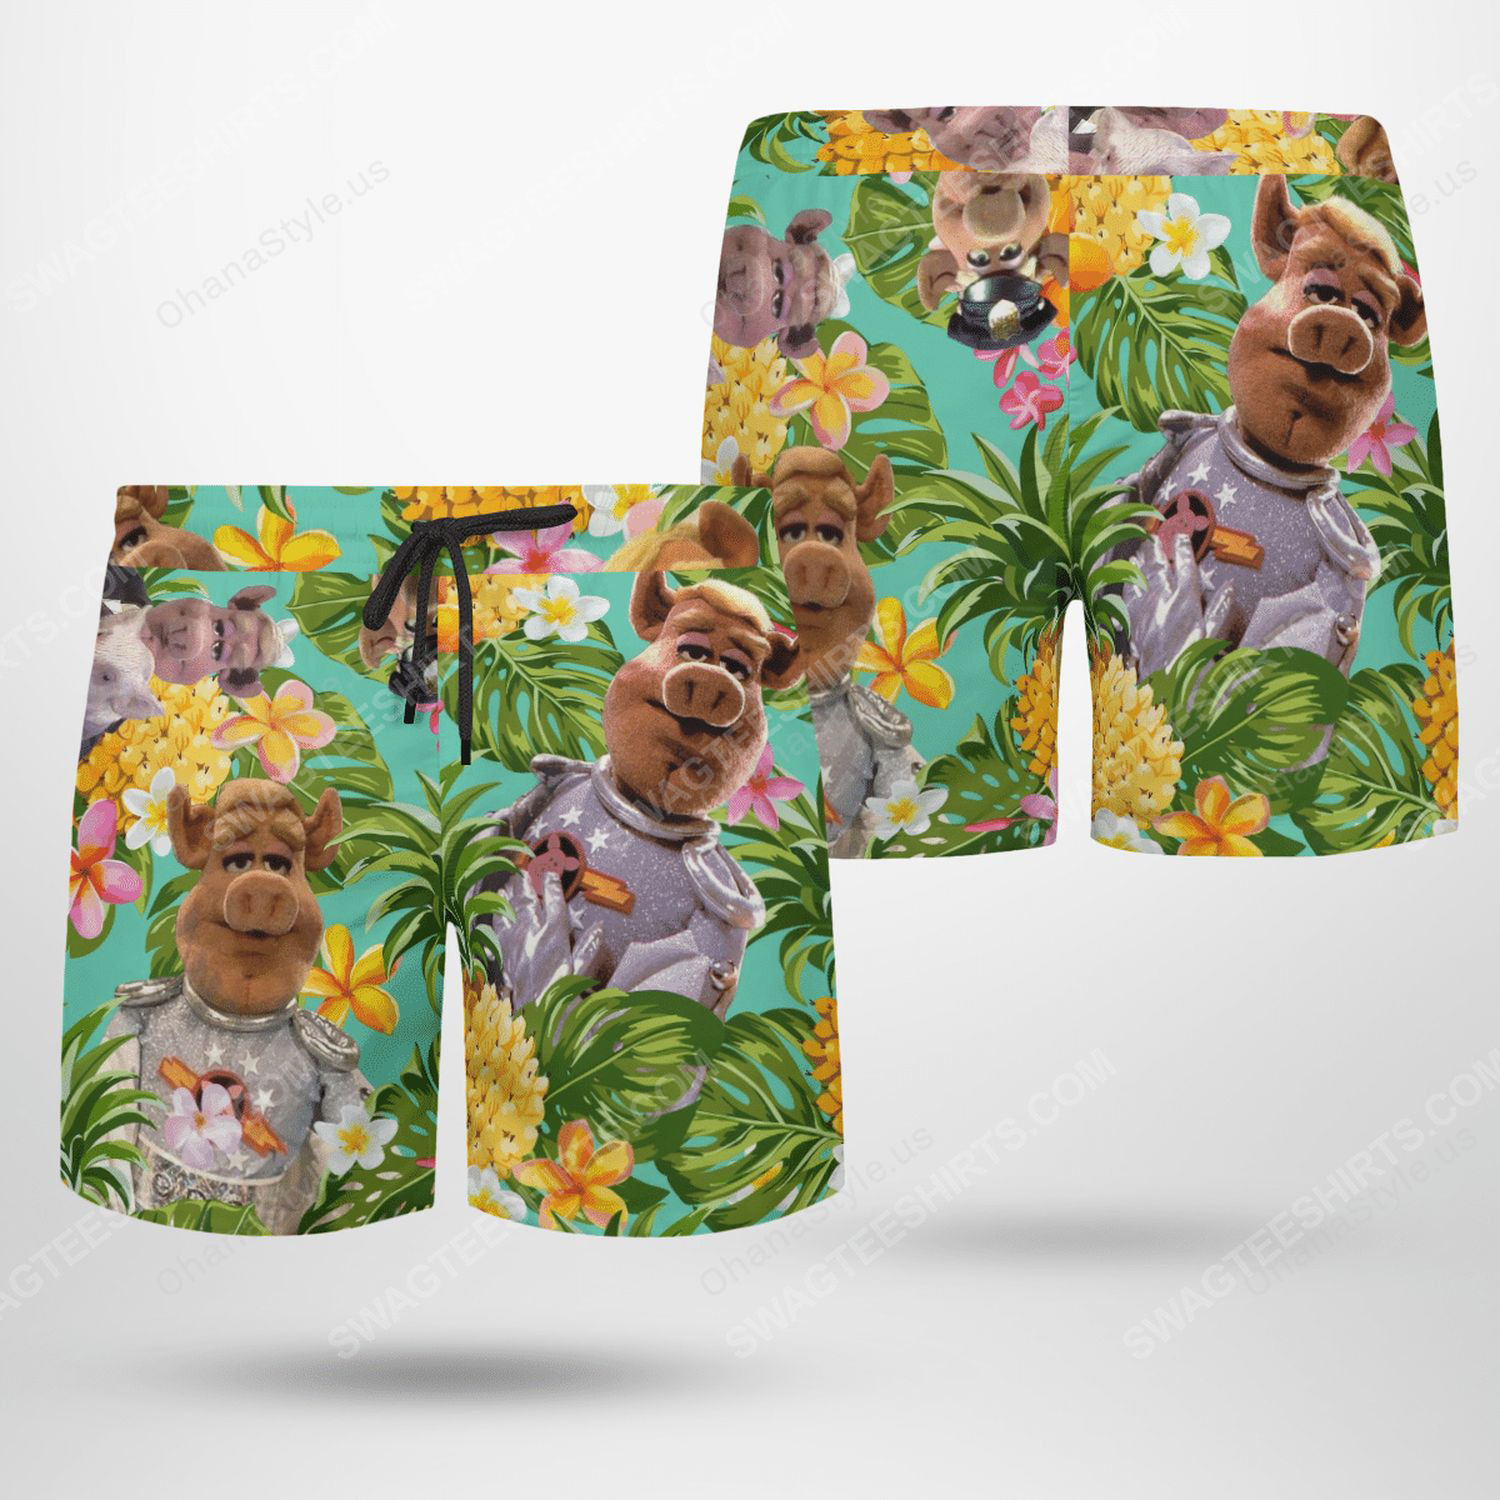 The muppet show link hogthrob tropical beach shorts